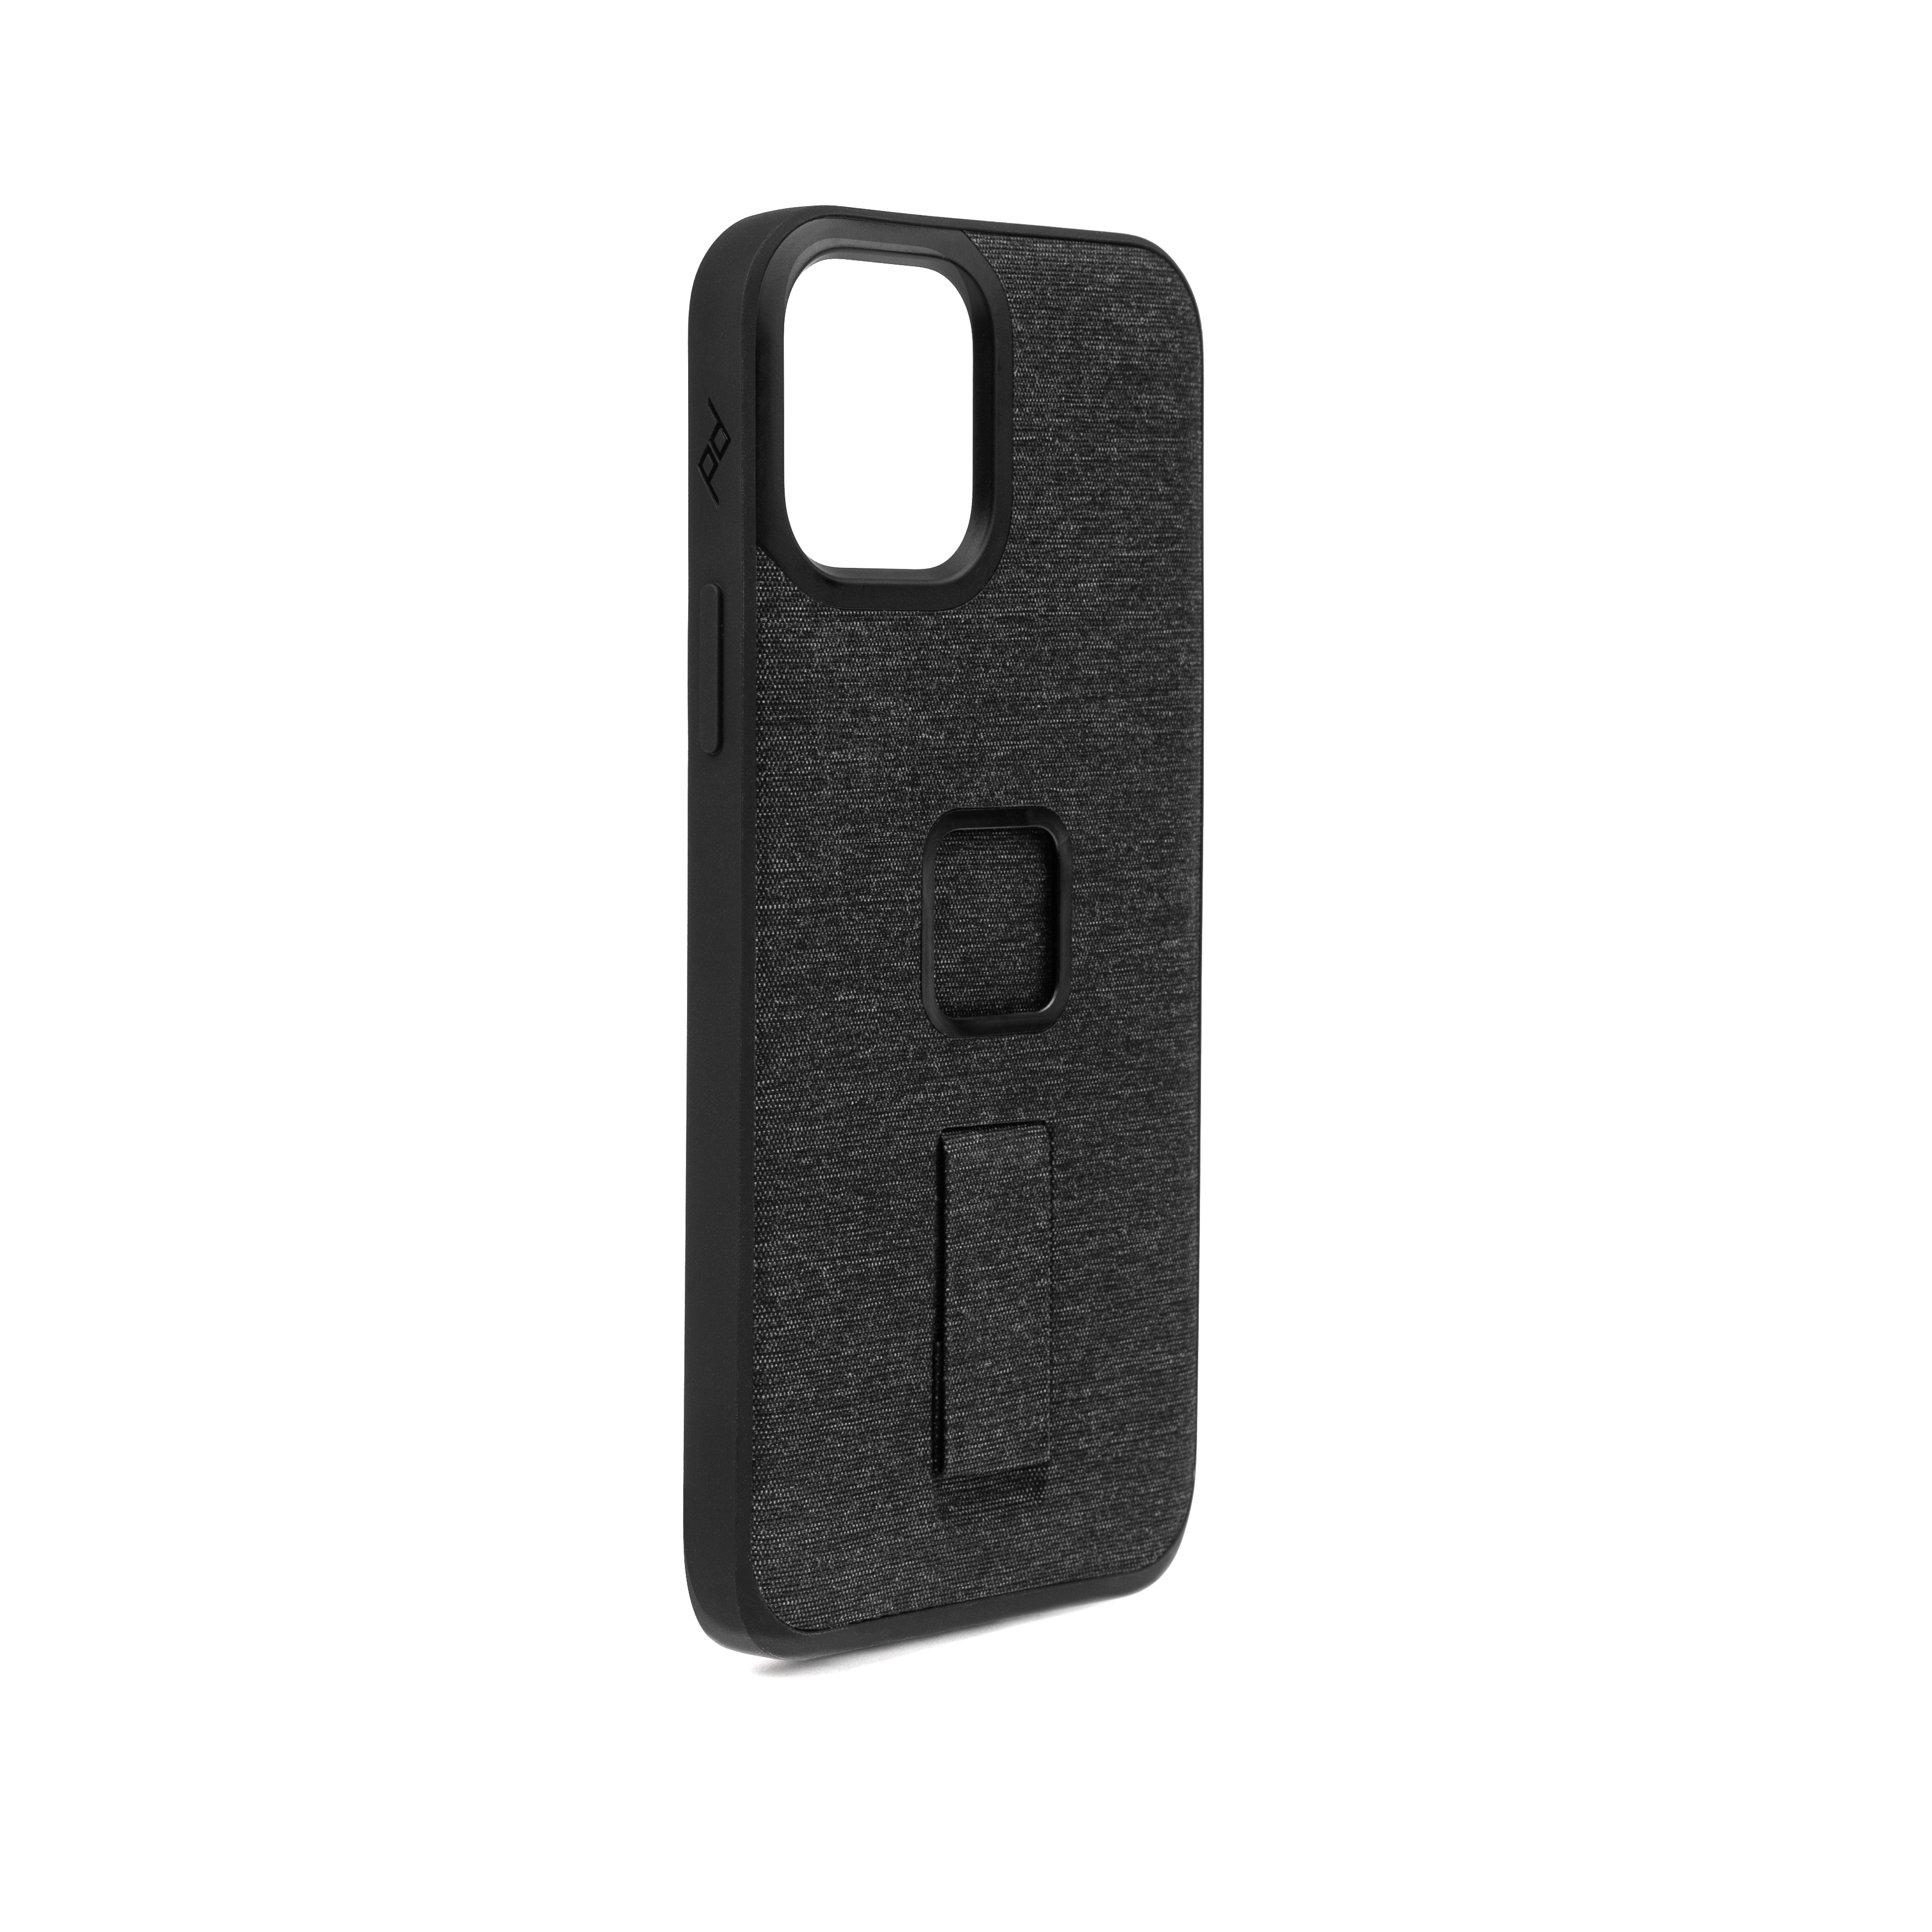 Peak Design - Mobile Everyday Loop Case iPhone 12 - 6.1" Charcoal